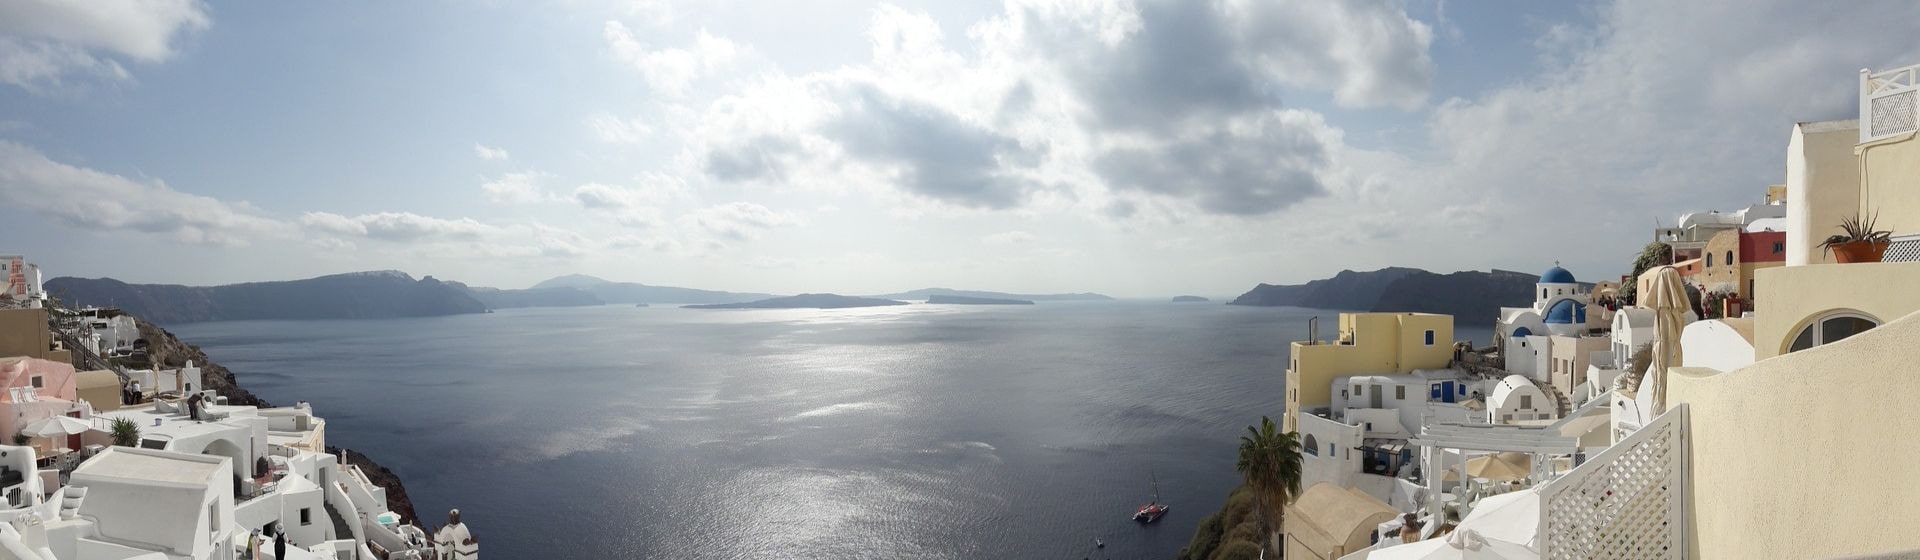 Santorini-Fira panorama